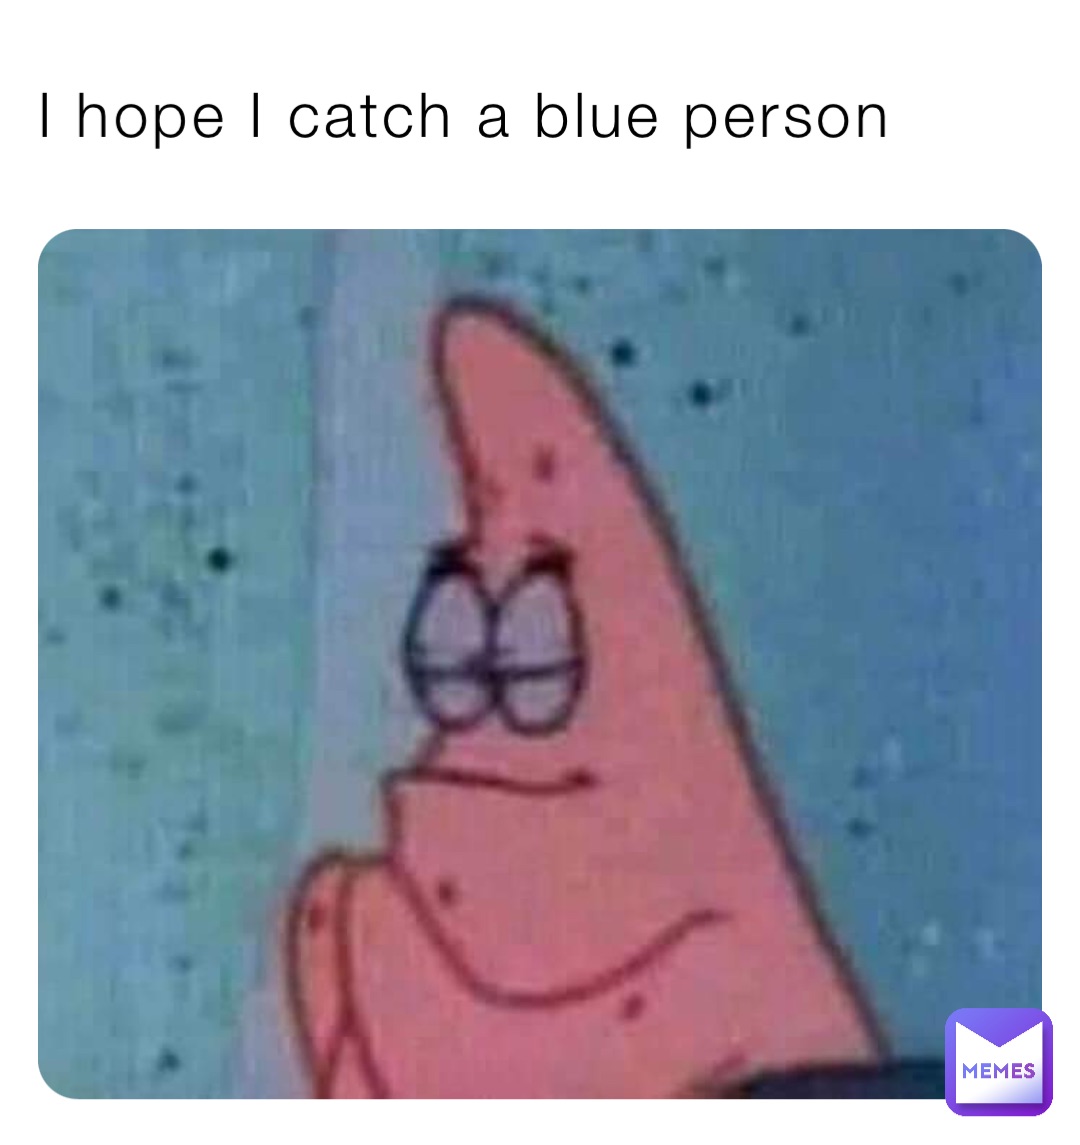 I hope I catch a blue person